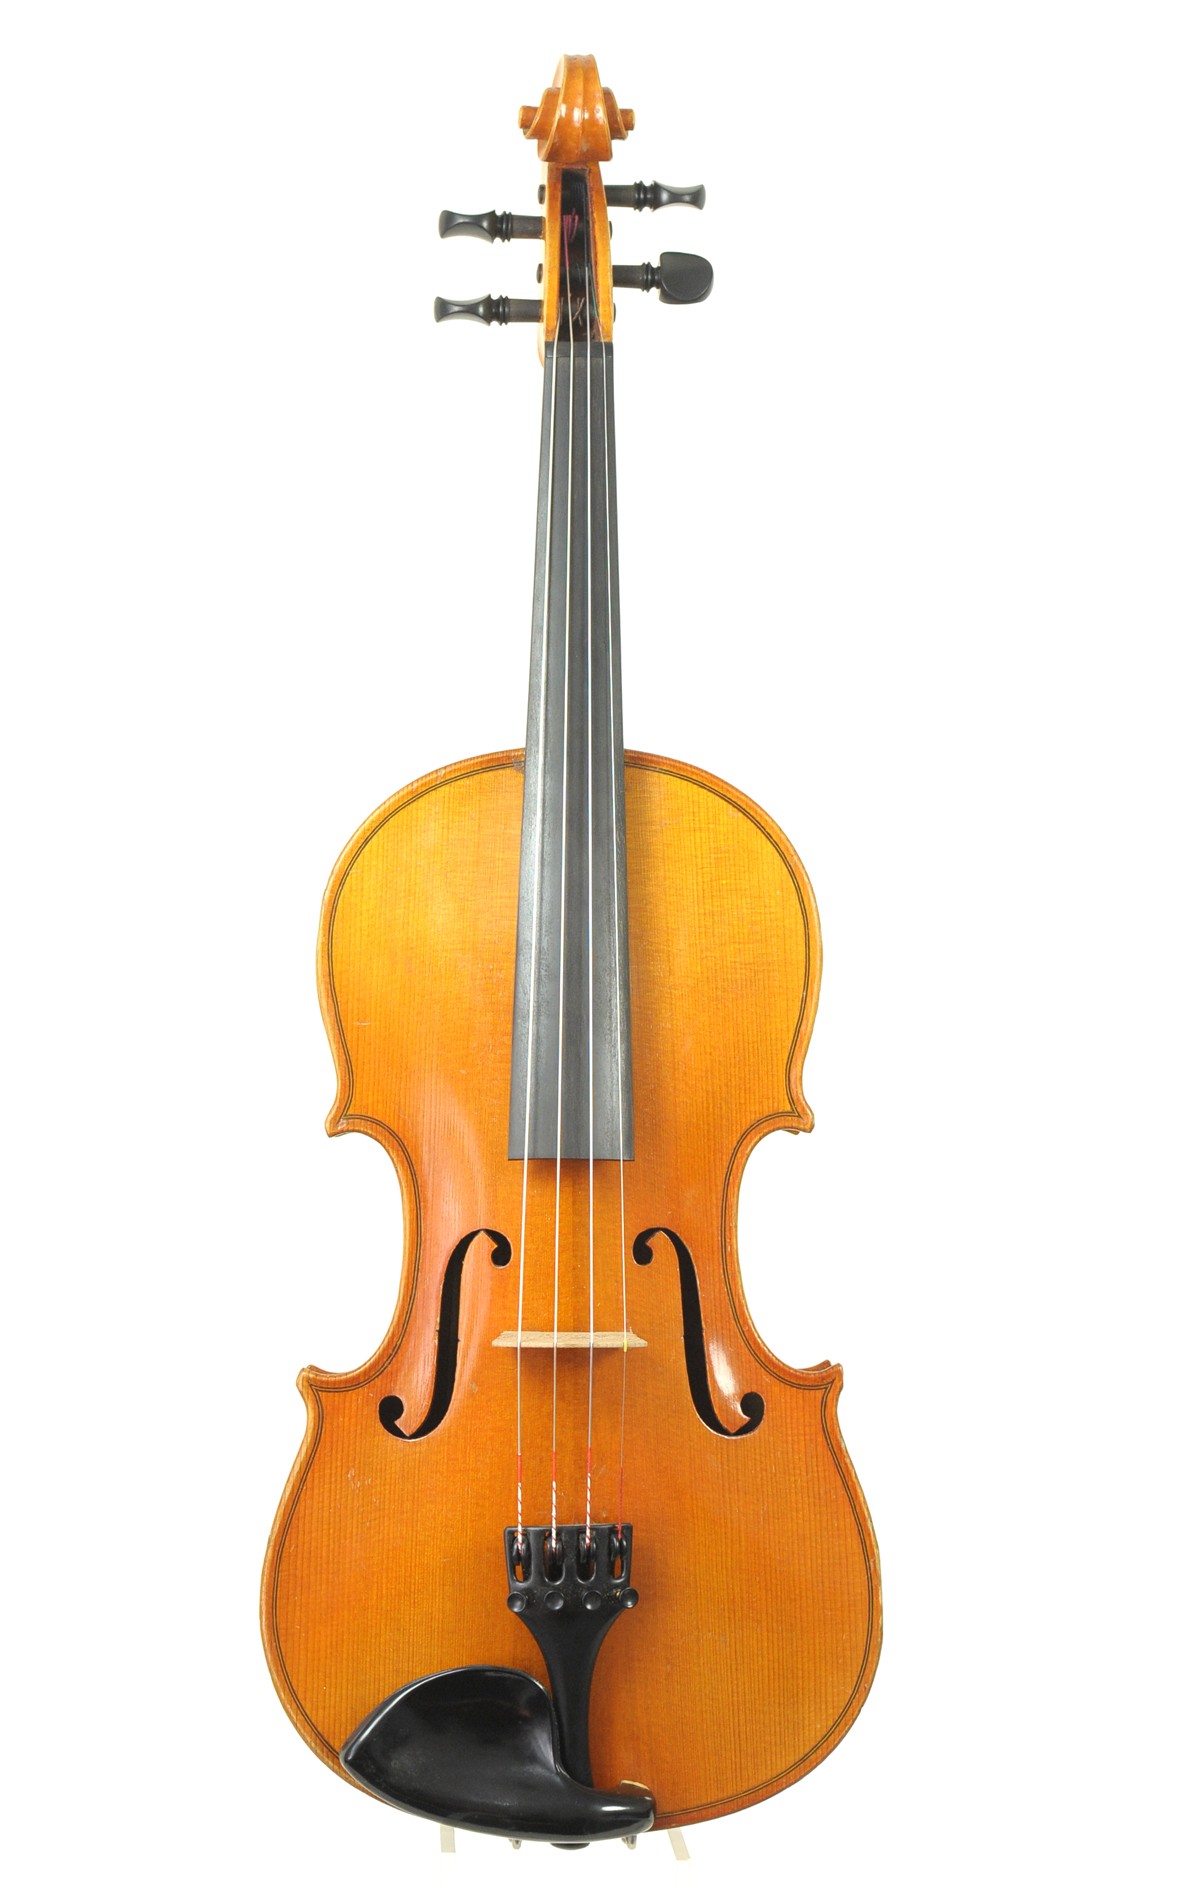 Antique Markneukirchen violin, by Schuster & Co.- top